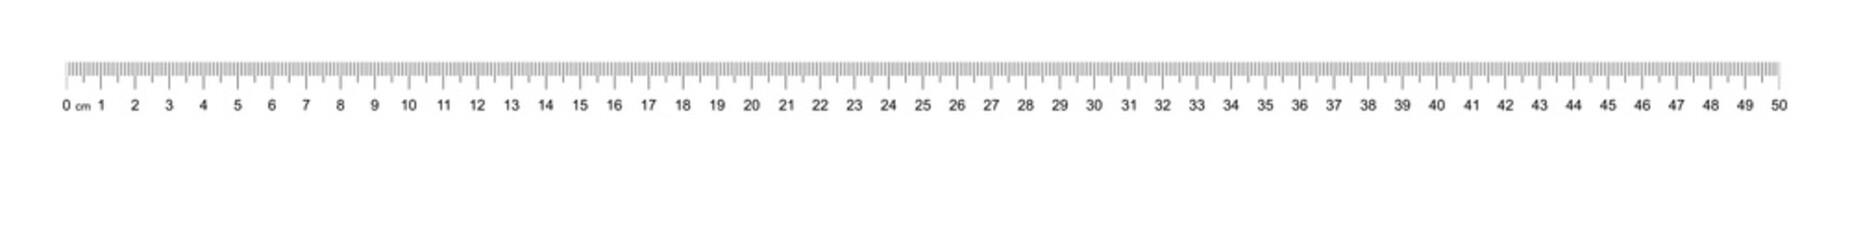 Ruler 50 cm. Measuring tool. Ruler scale. Ruler grid 50 cm. Size indicator units. Metric Centimeter size indicators. Vector